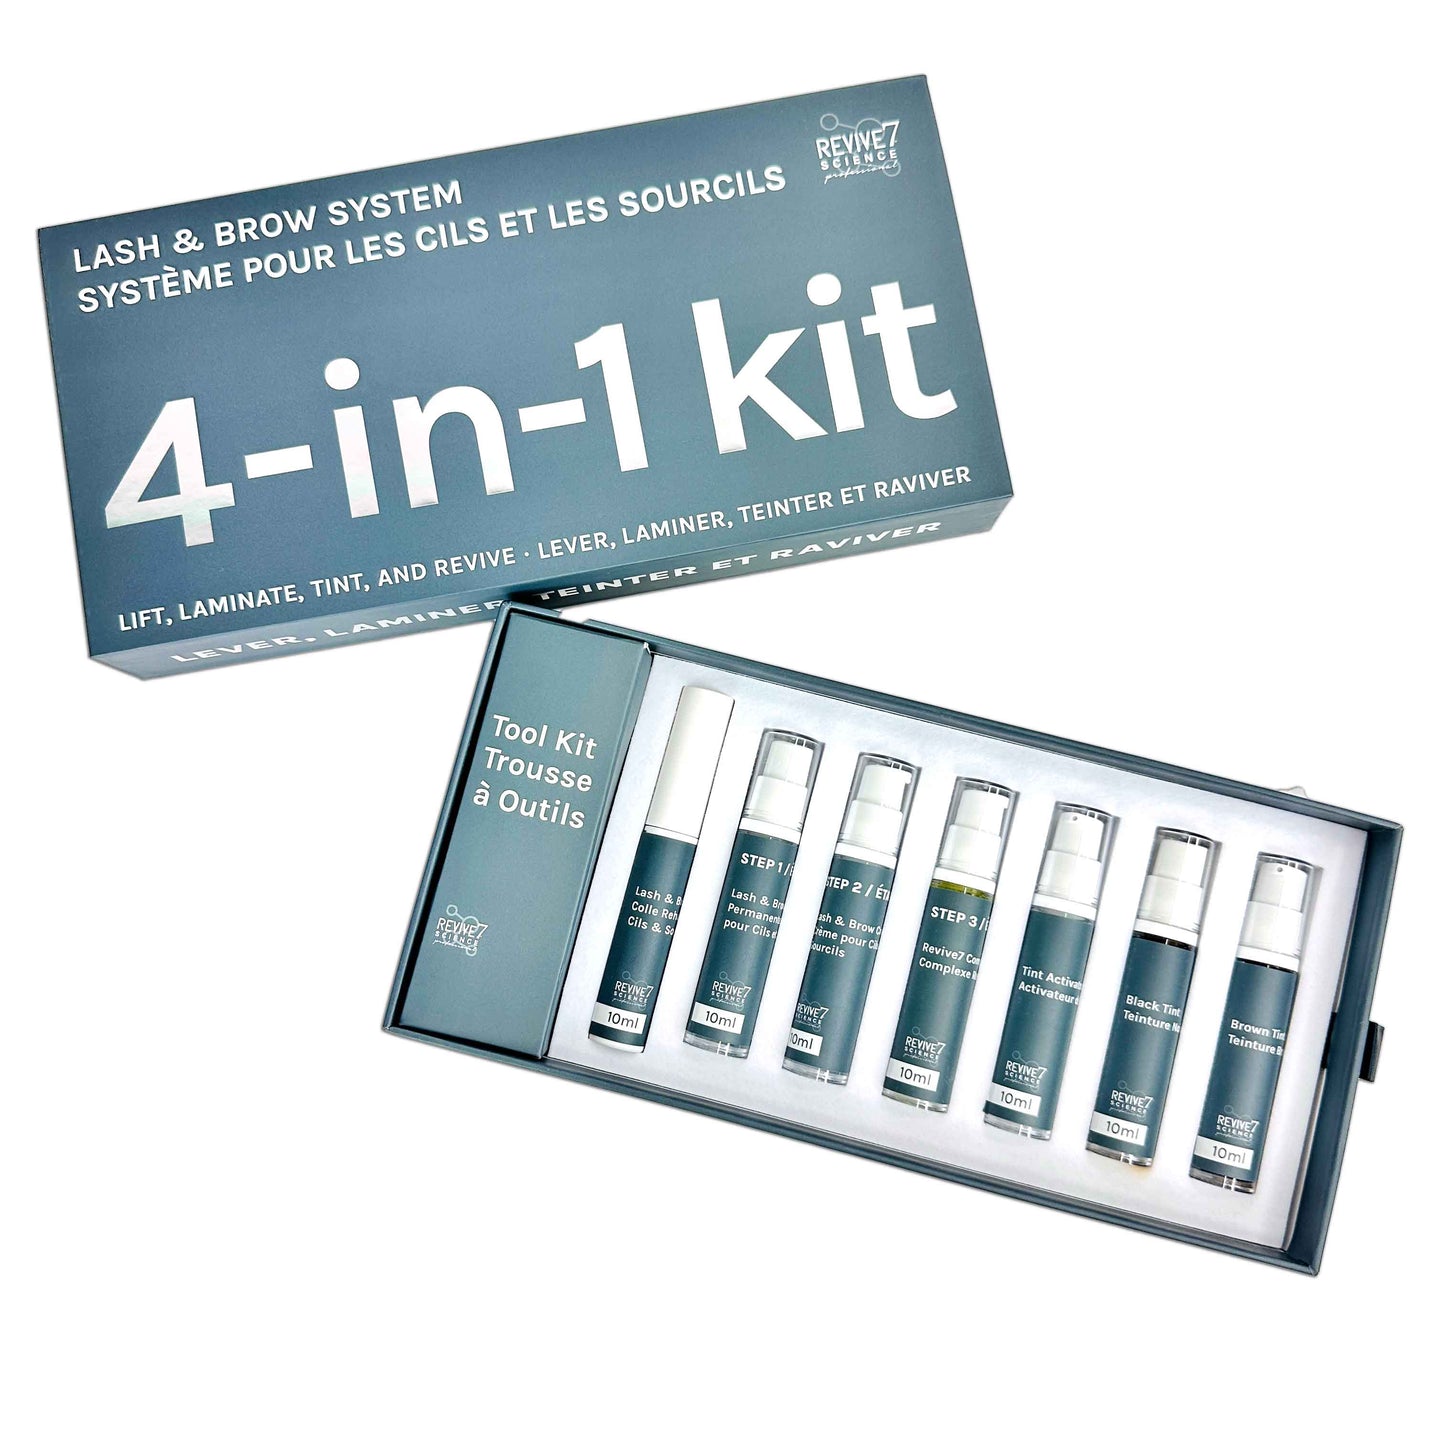 Revive7 Professional 4-in-1 Kit: Lash Lift, Brow Lamination, Tint & Revive